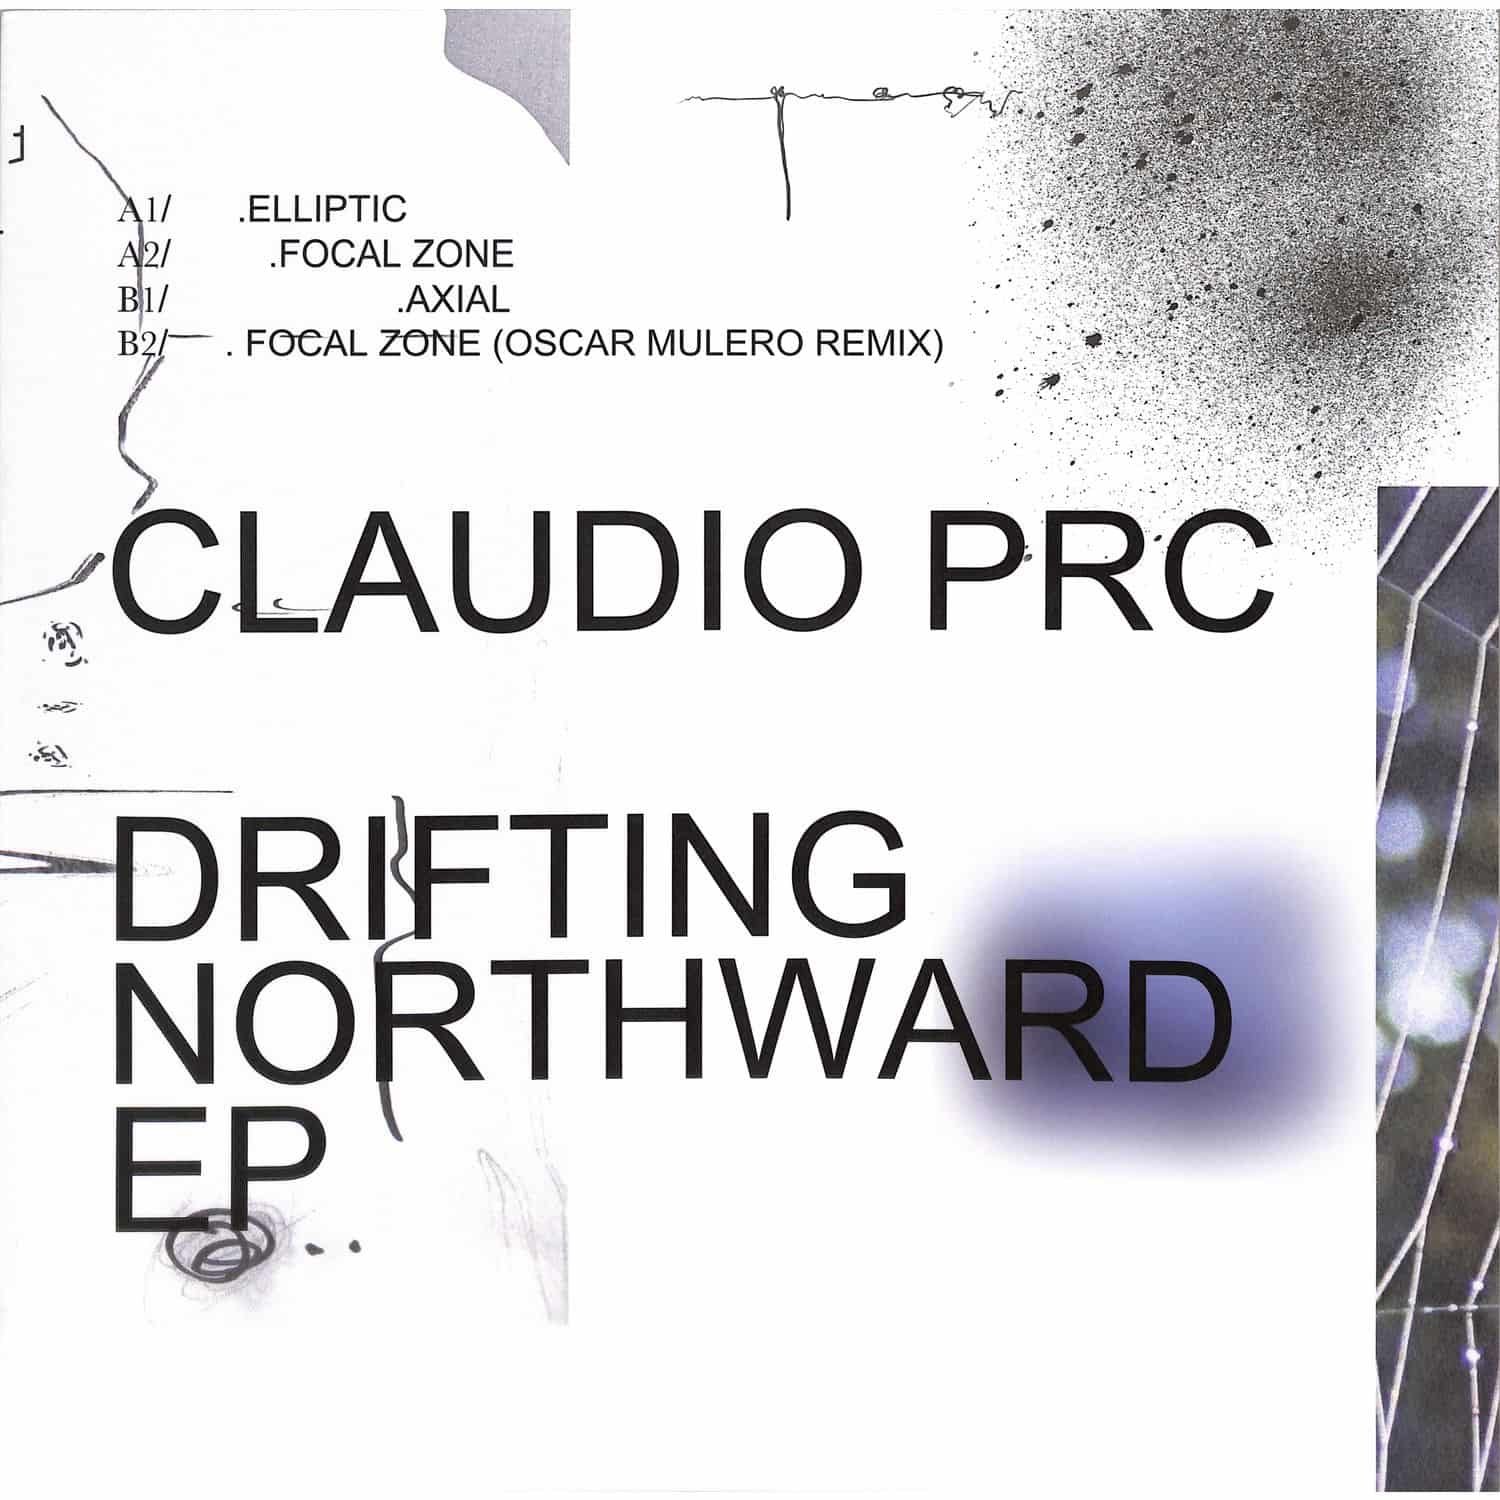 Claudio PRC - DRIFTING NORTHWARD EP